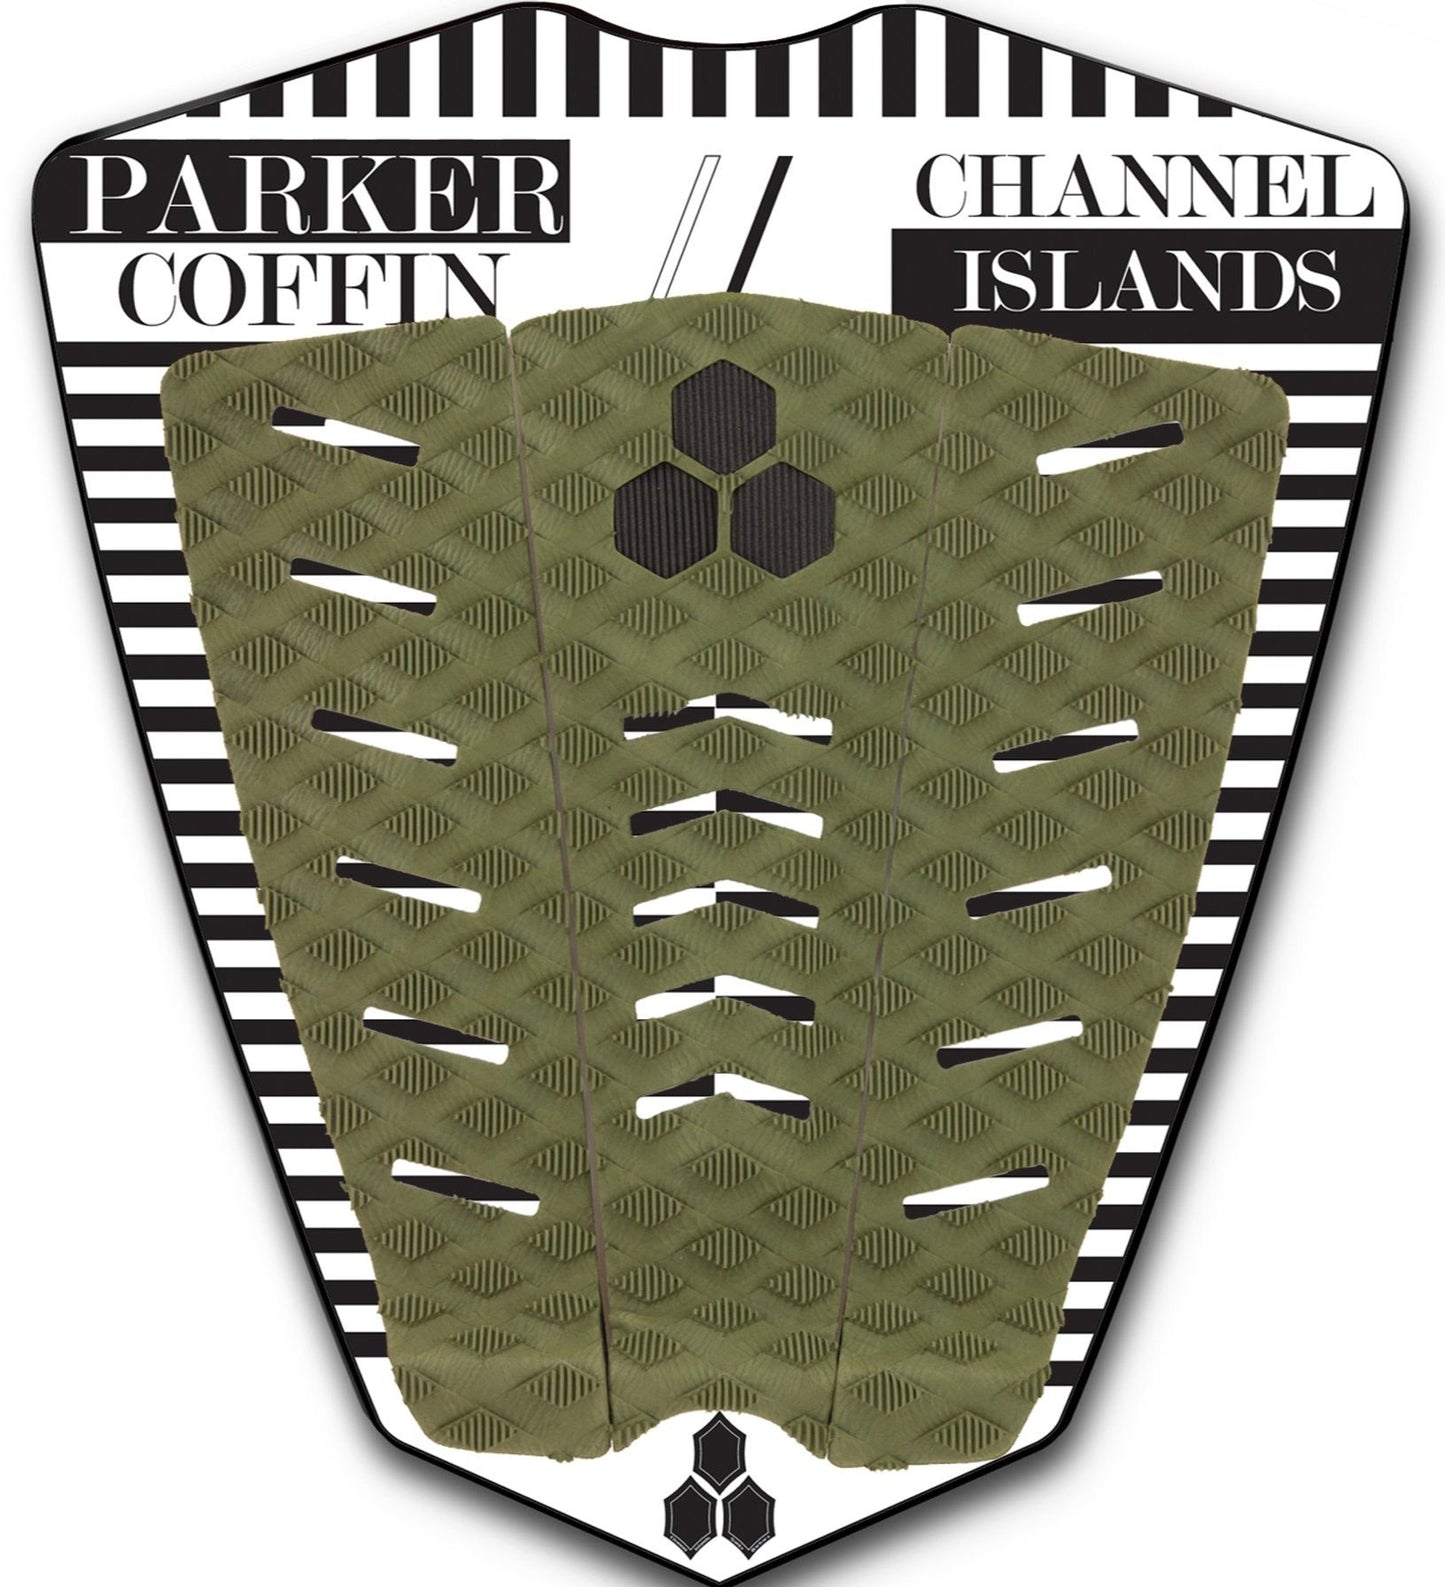 Channel Islands Bio Deck Grip Surfboard Traction Parker Coffin - Army Green